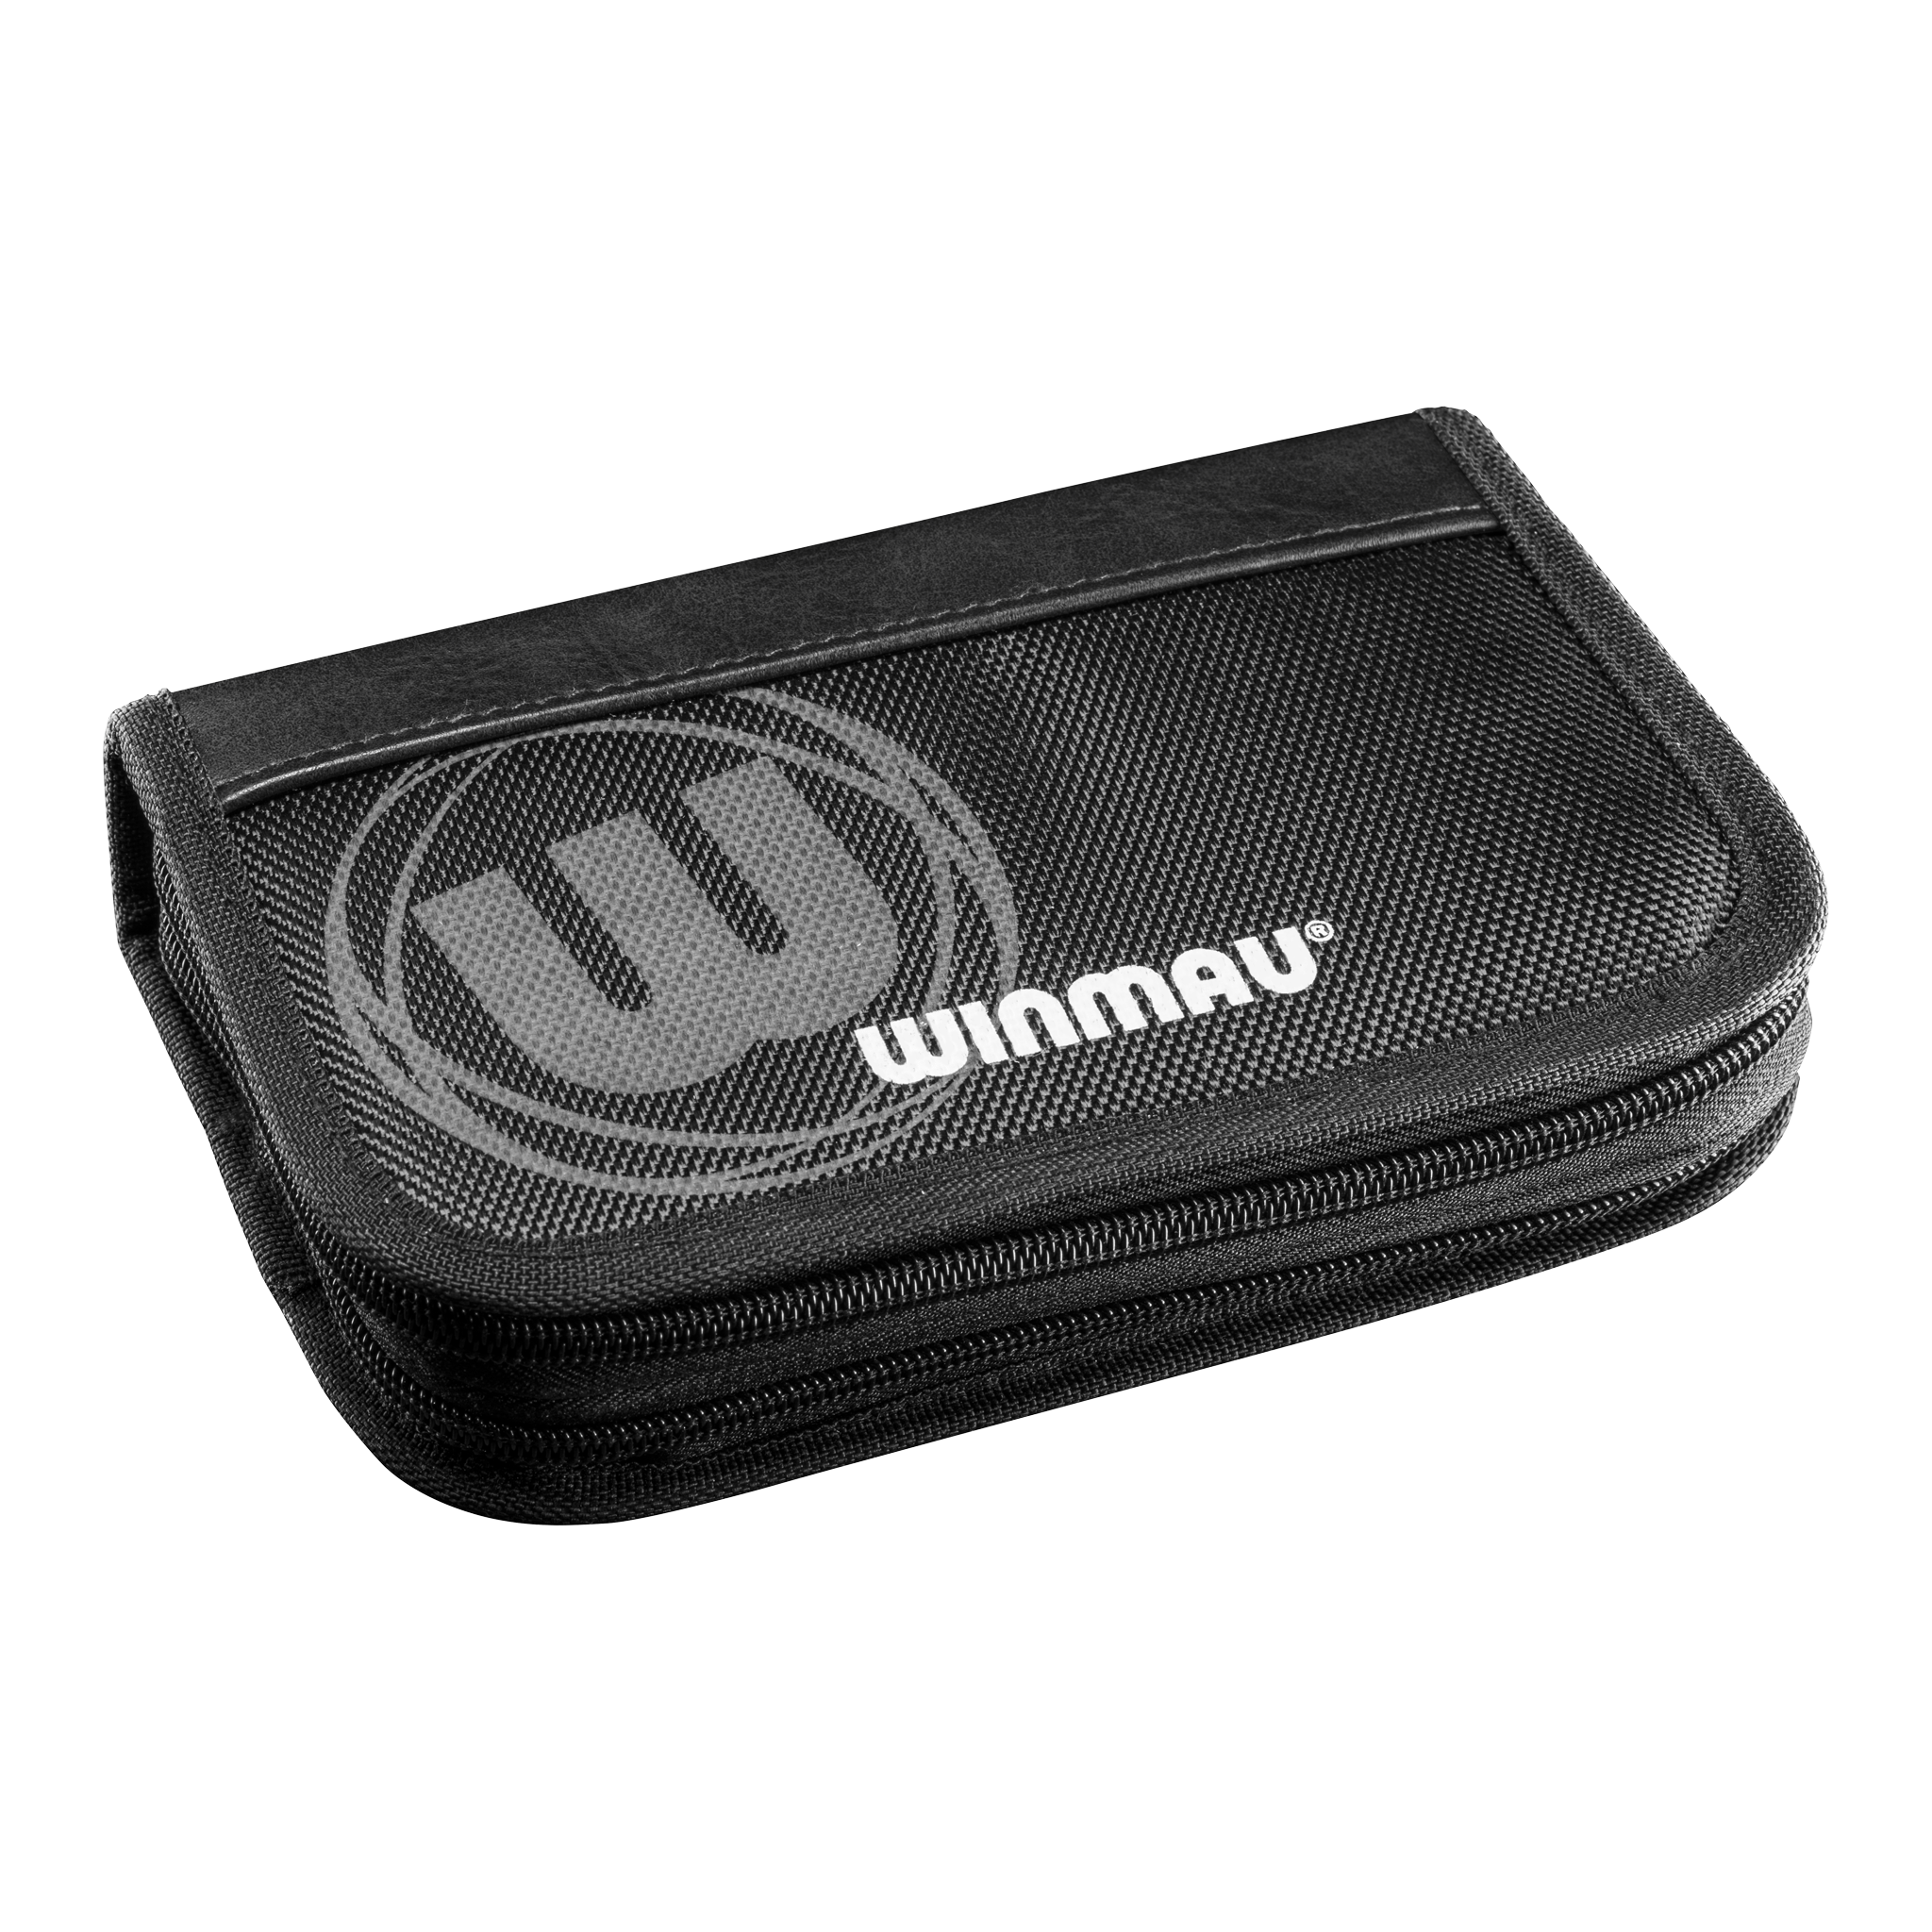 Winmau Urban X Extra Large Darts Case Black Cases